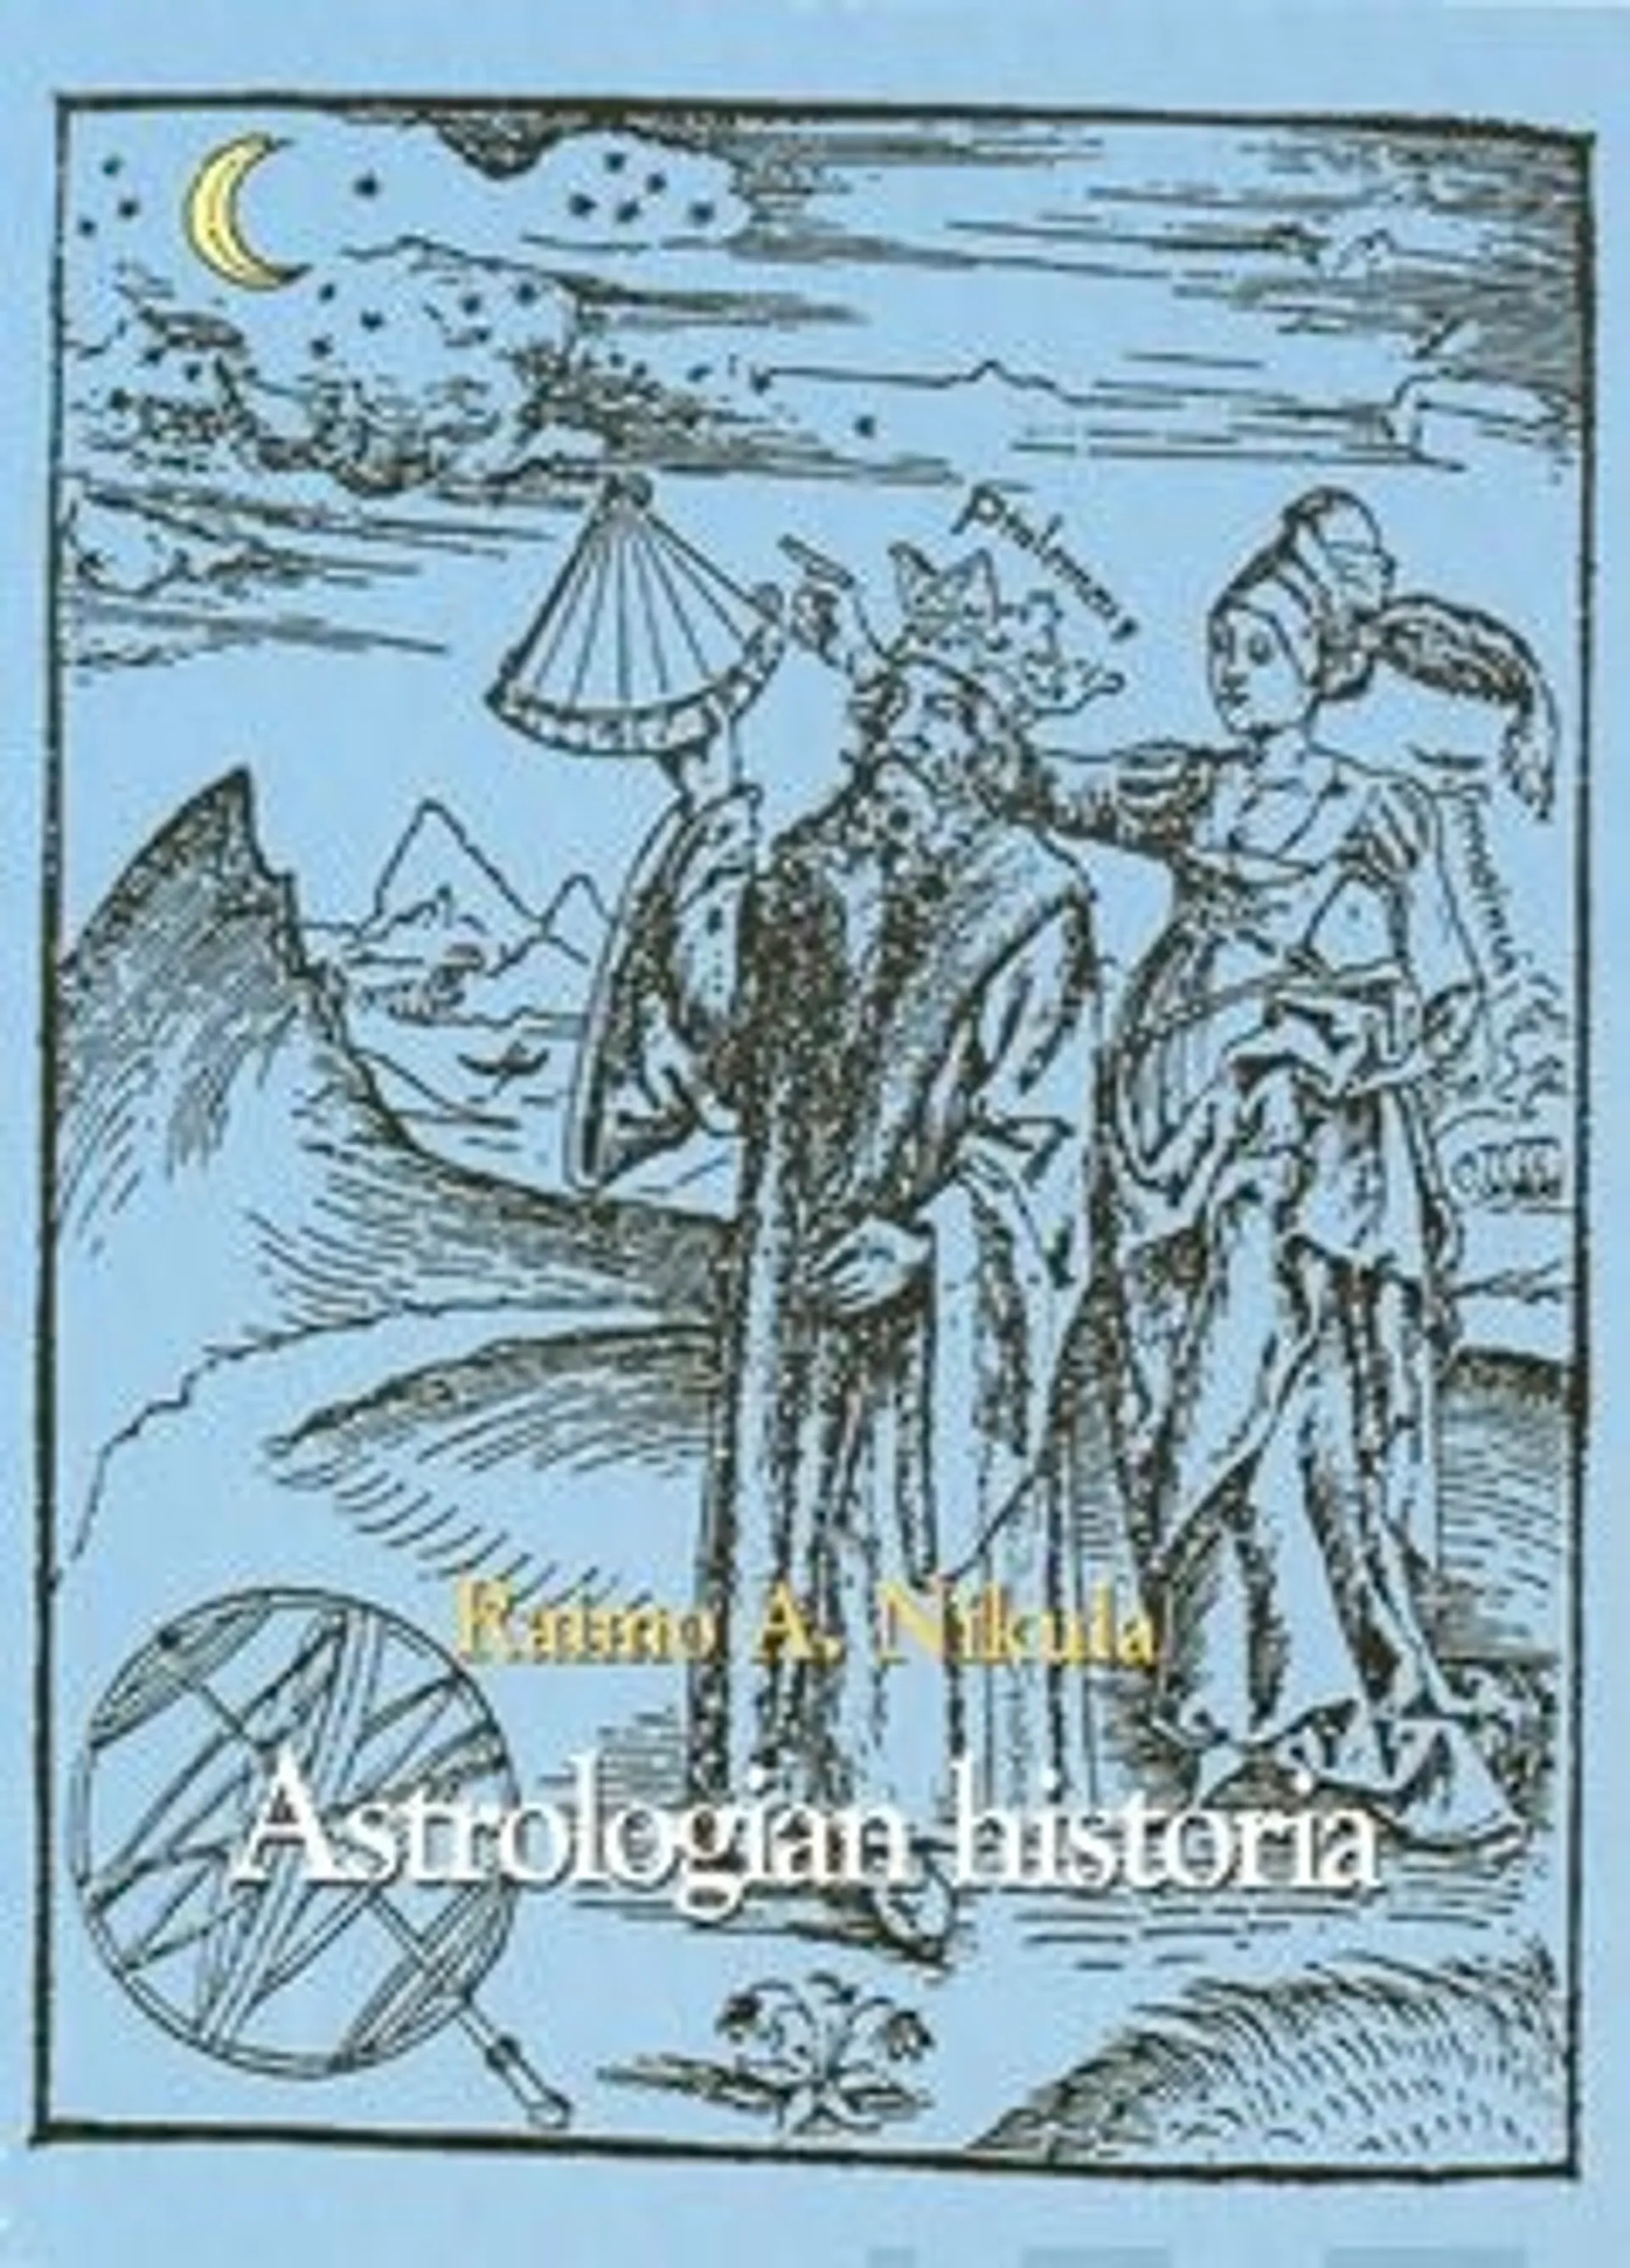 Nikula, Astrologian historia